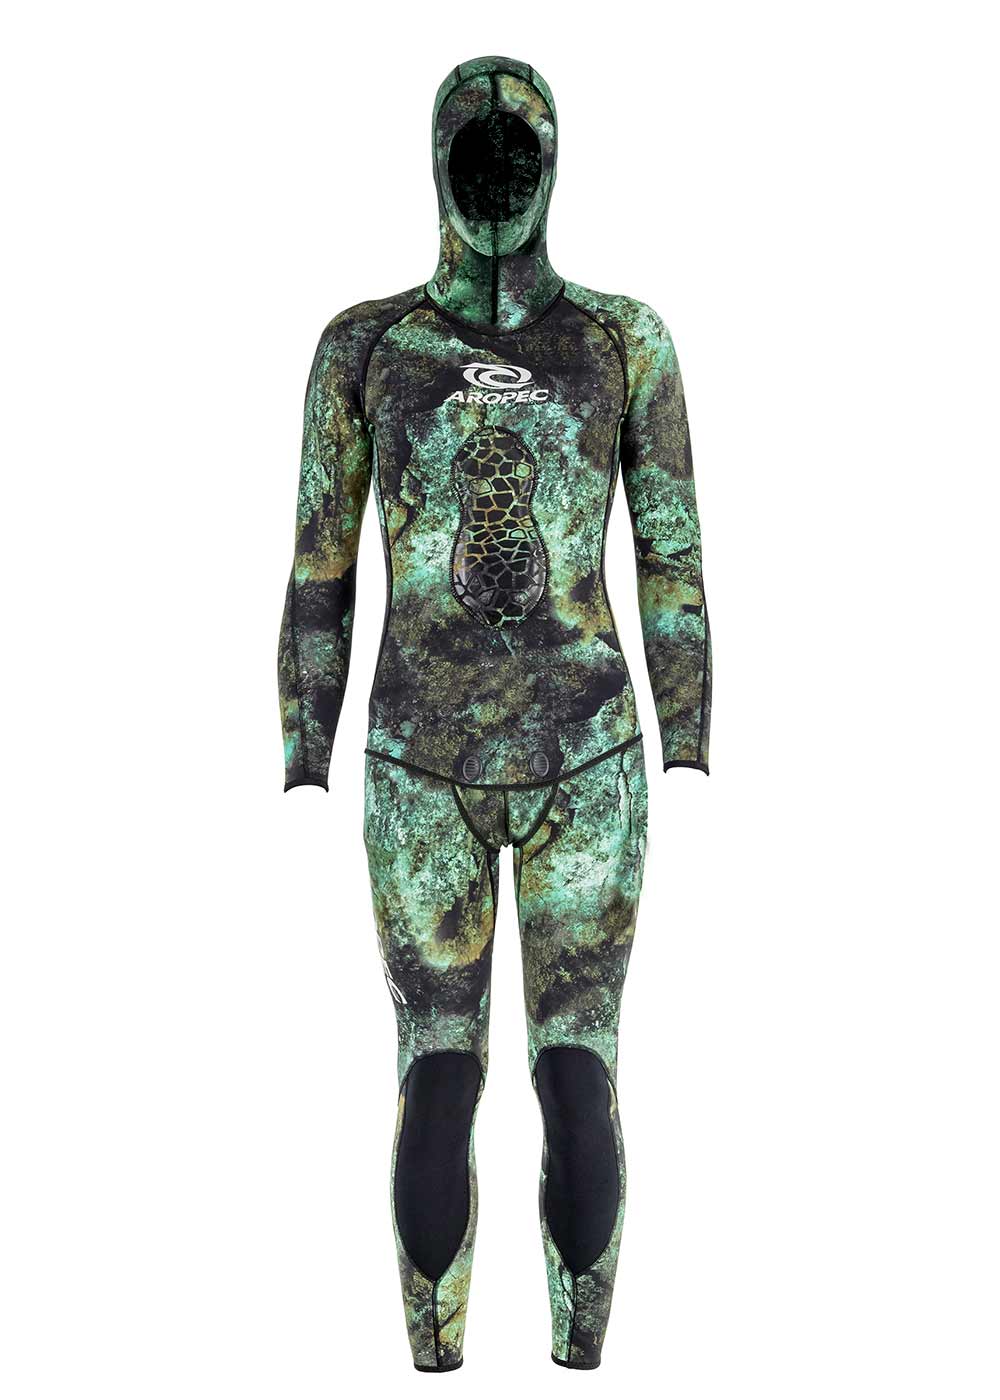 Aropec Mens Verde 3mm Open Cell 2 Piece Wetsuit - Adreno - Ocean Outfitters